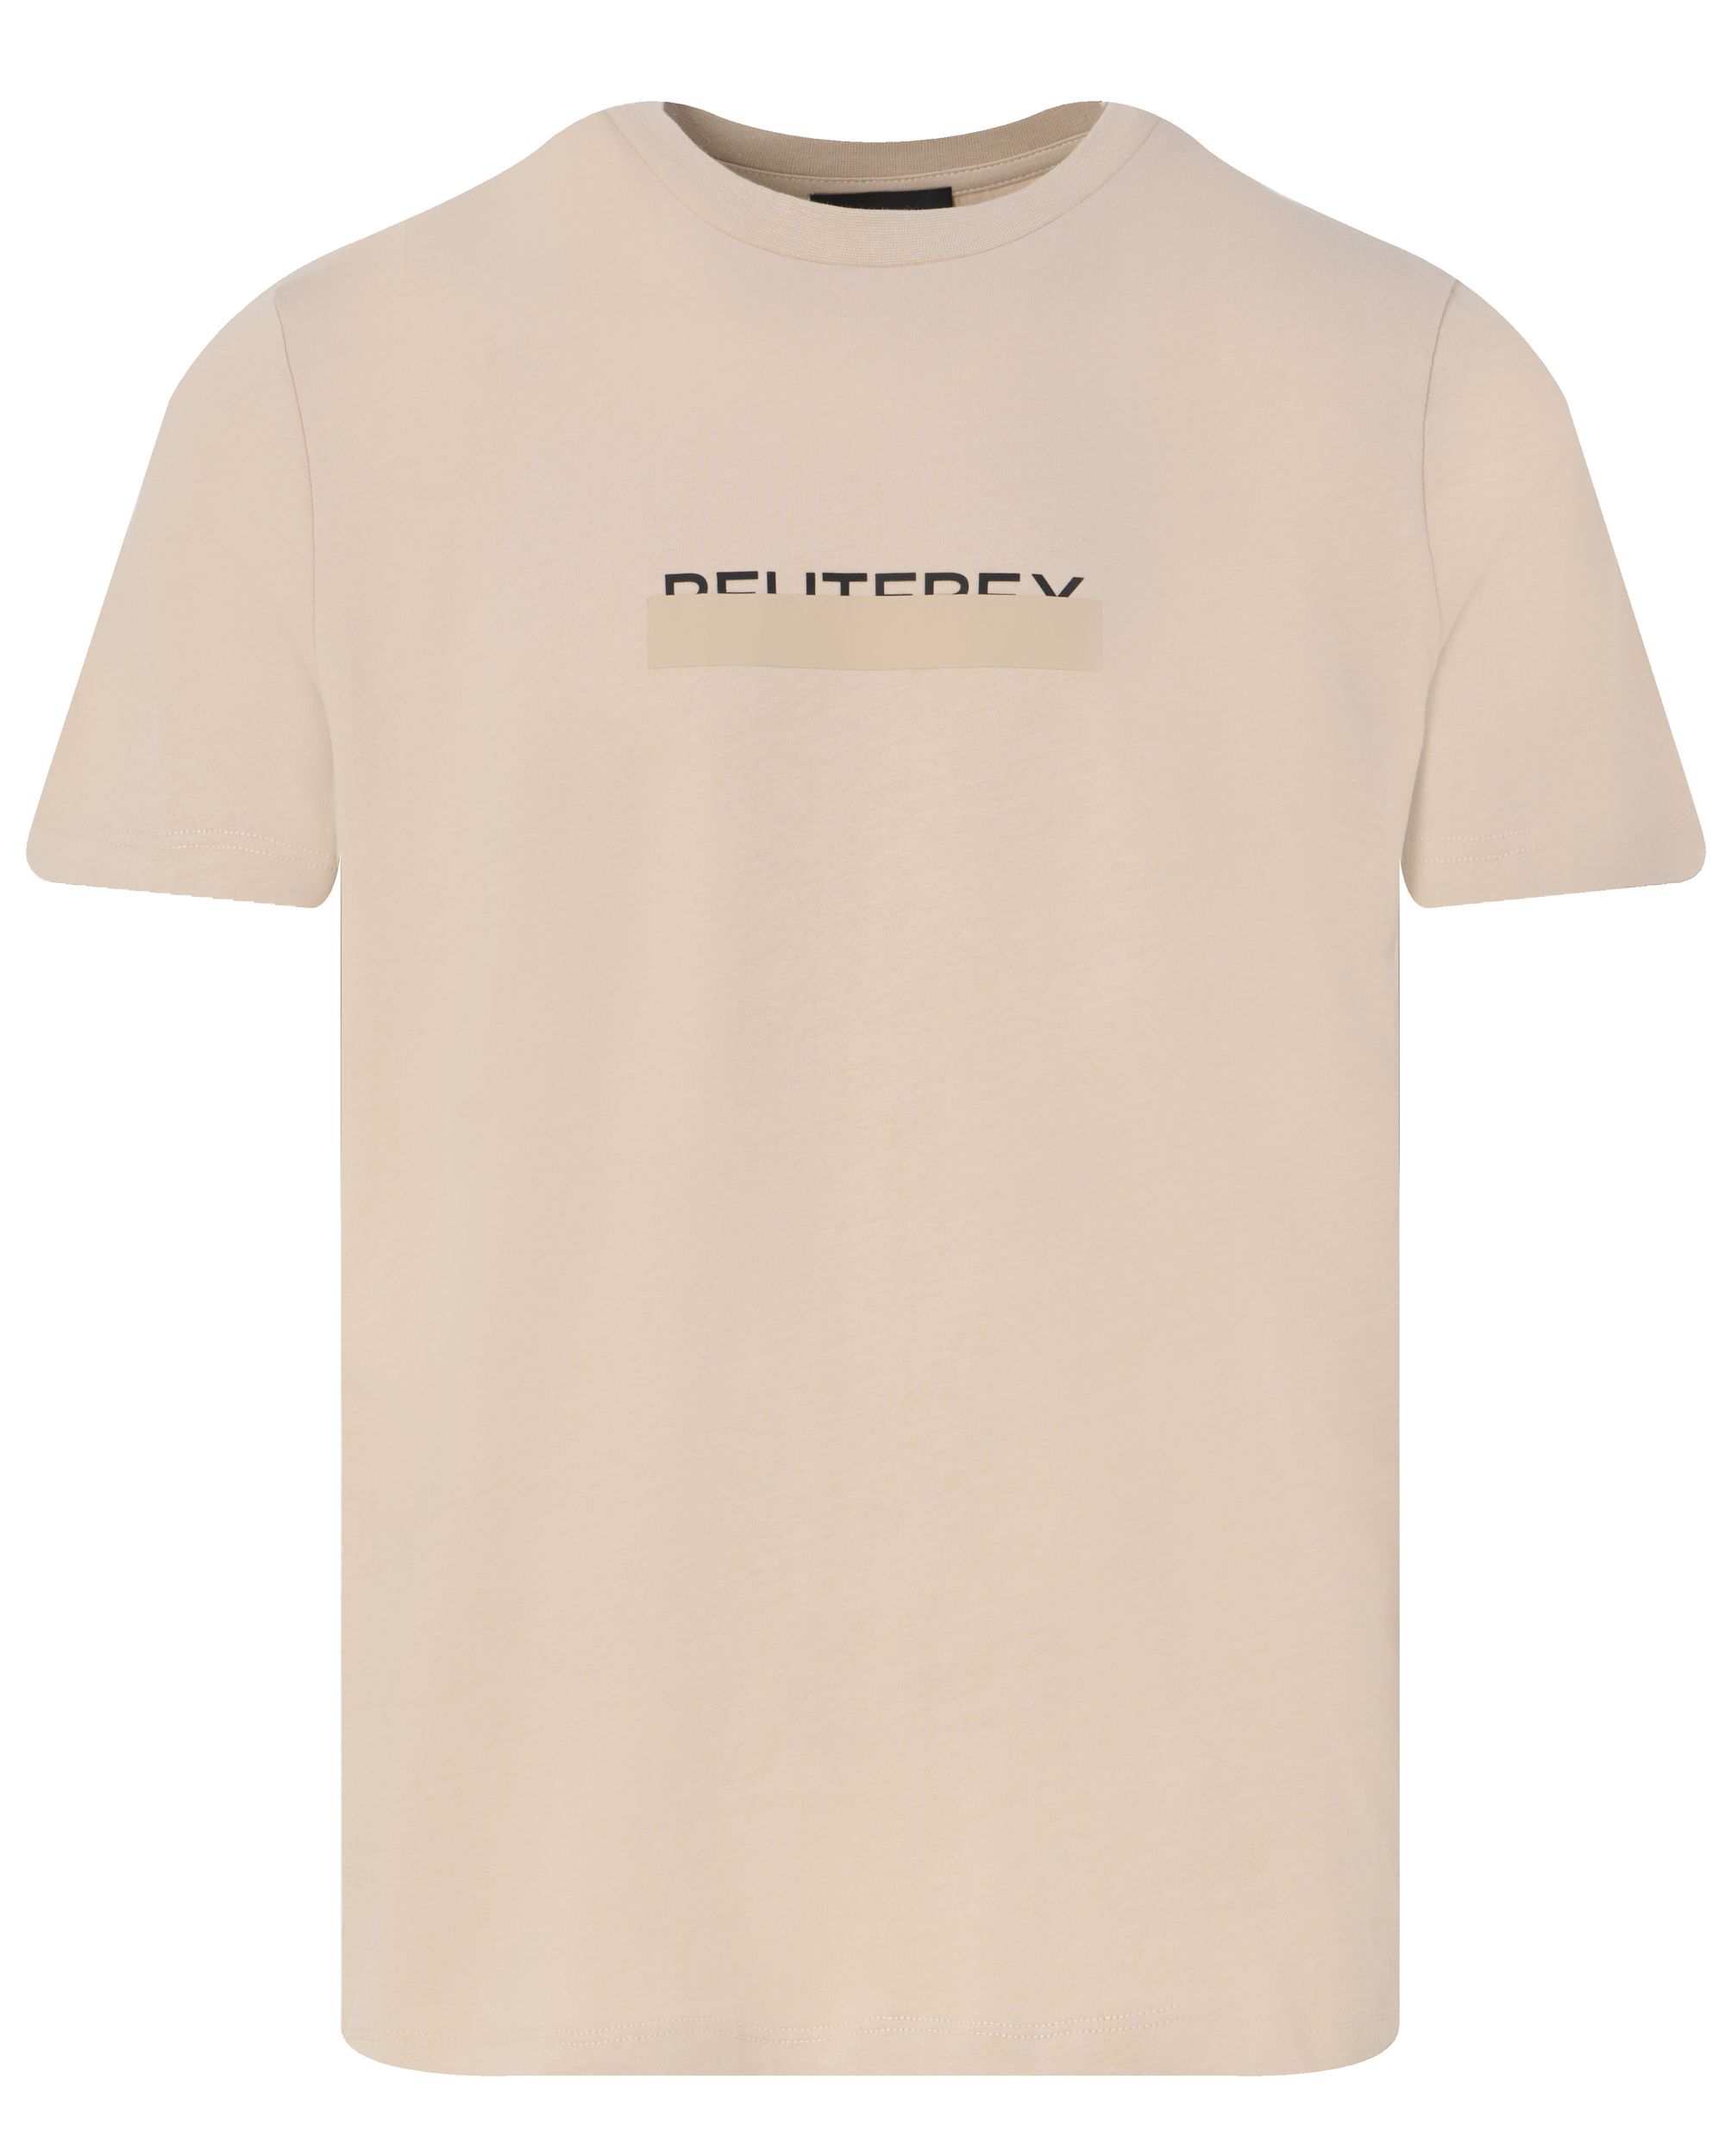 Peuterey Manderly T-shirt KM Beige 094277-001-L